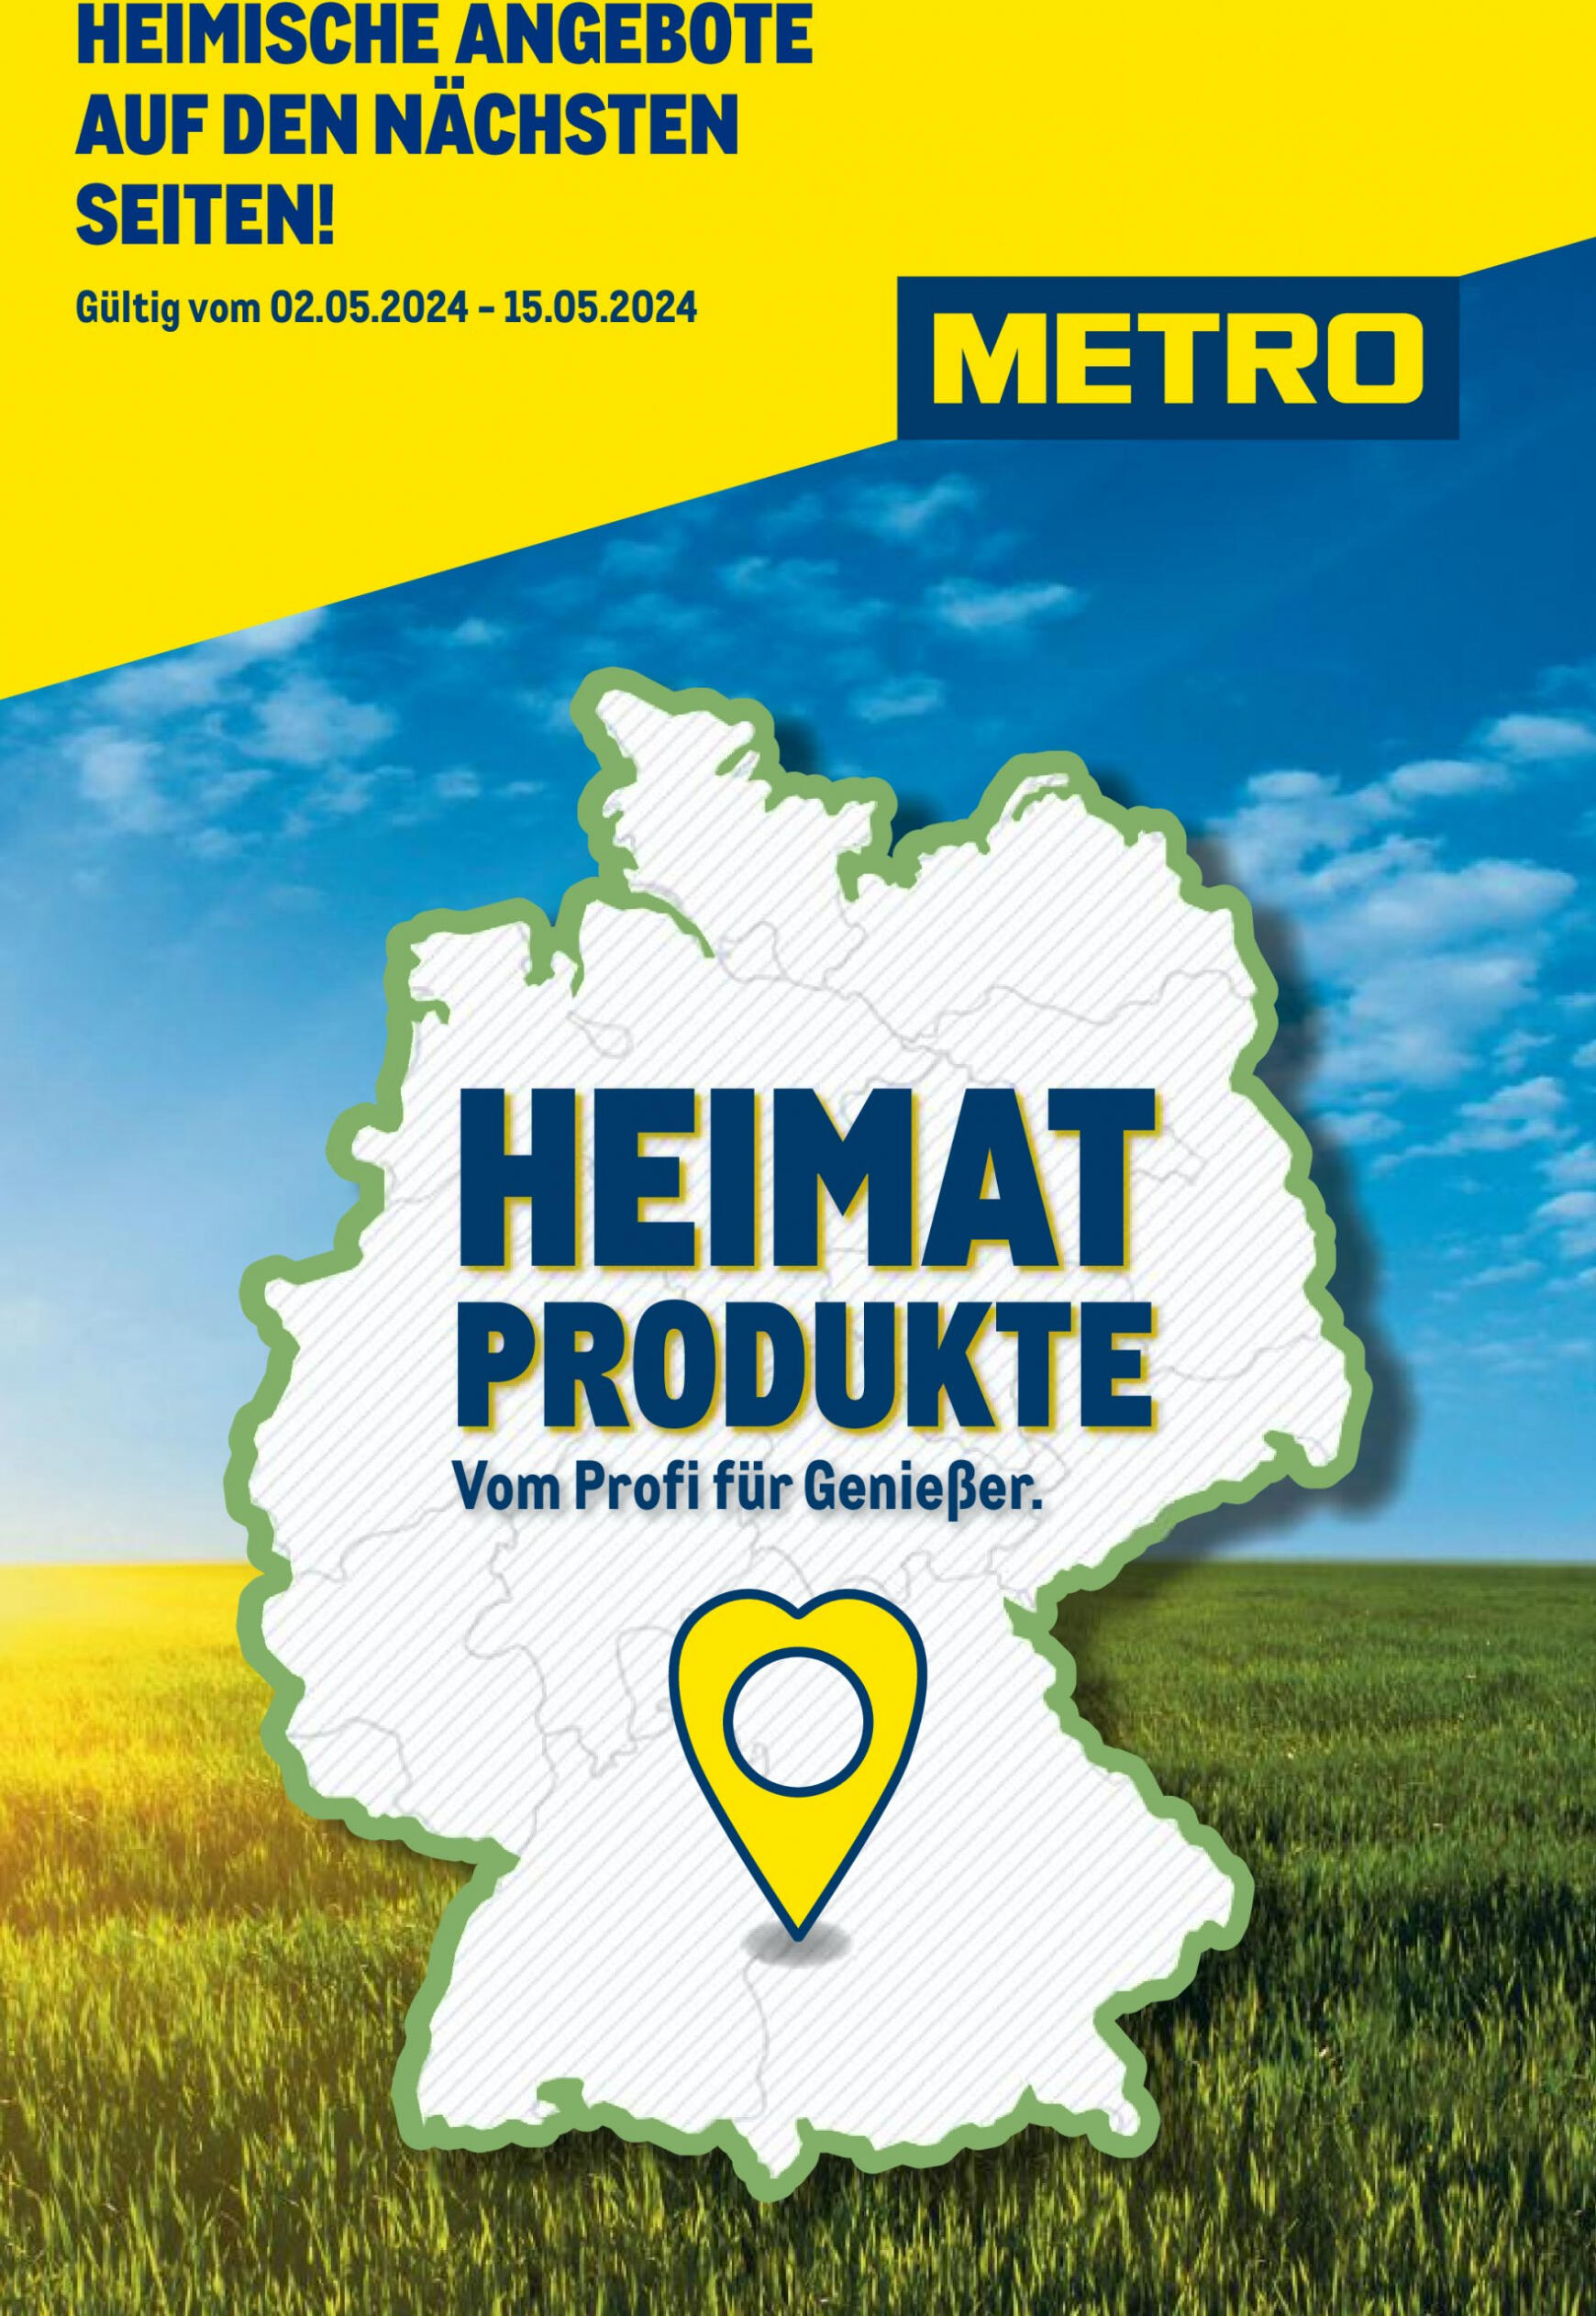 metro - Flyer Metro - Regionaler Adresseinleger aktuell 02.05. - 15.05. - page: 1